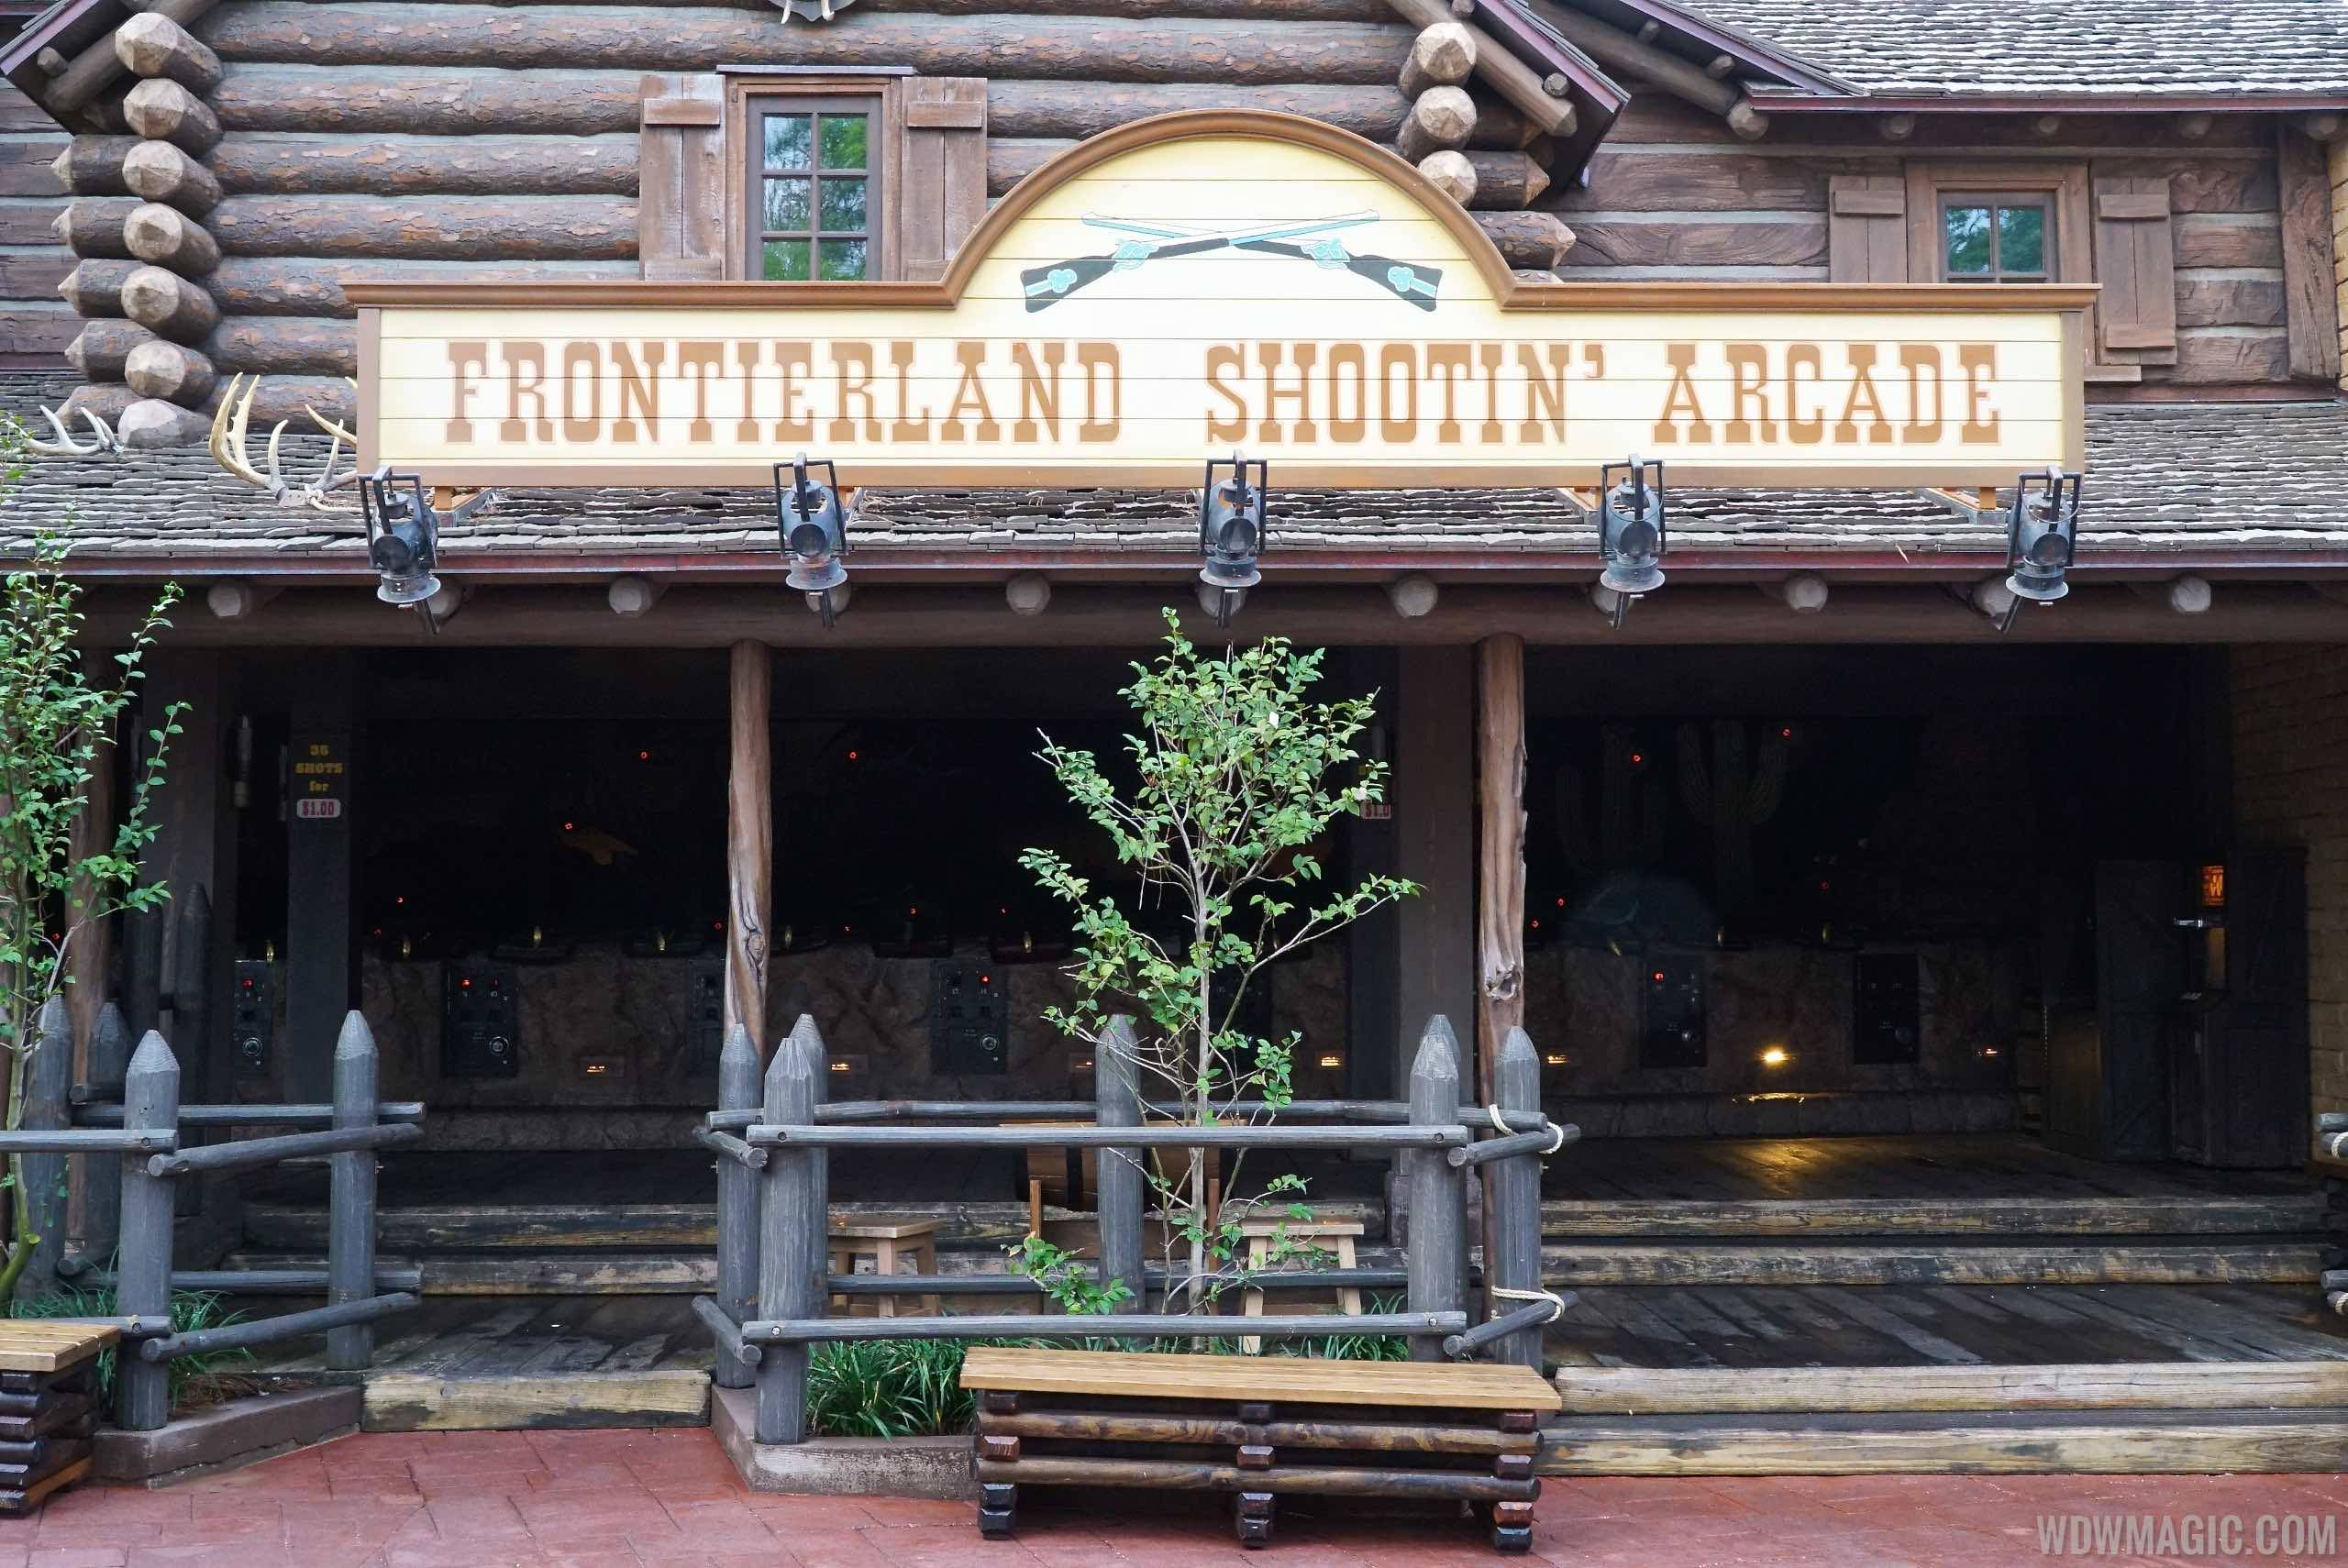 Frontierland Shootin' Arcade overview